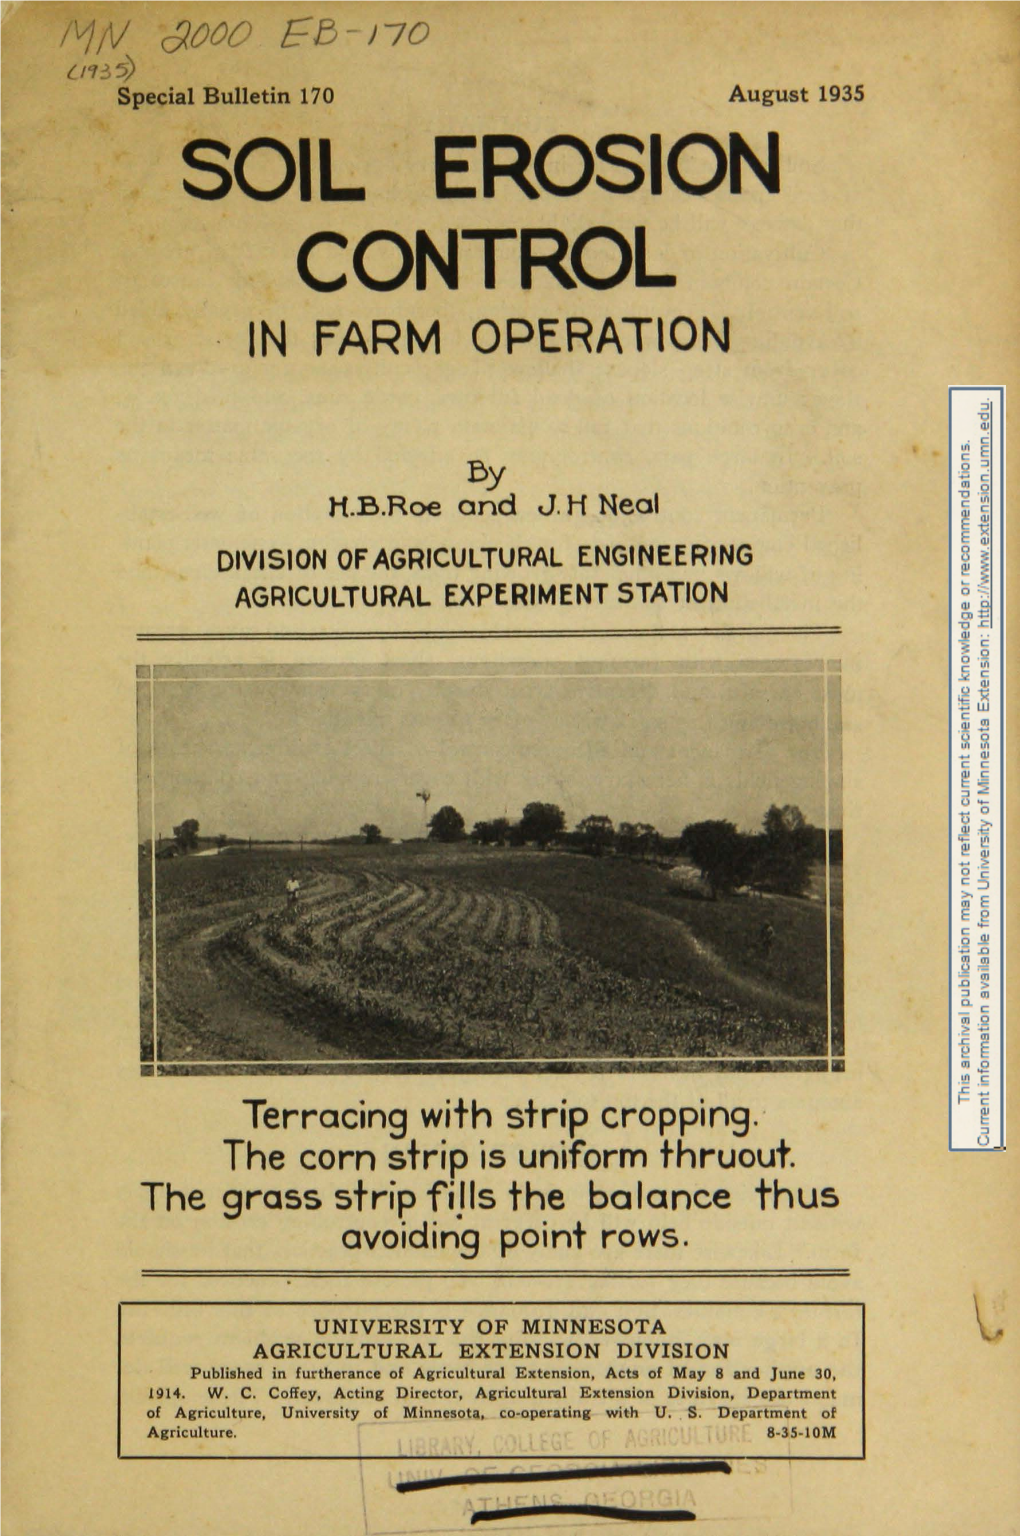 Control in Farm Operation